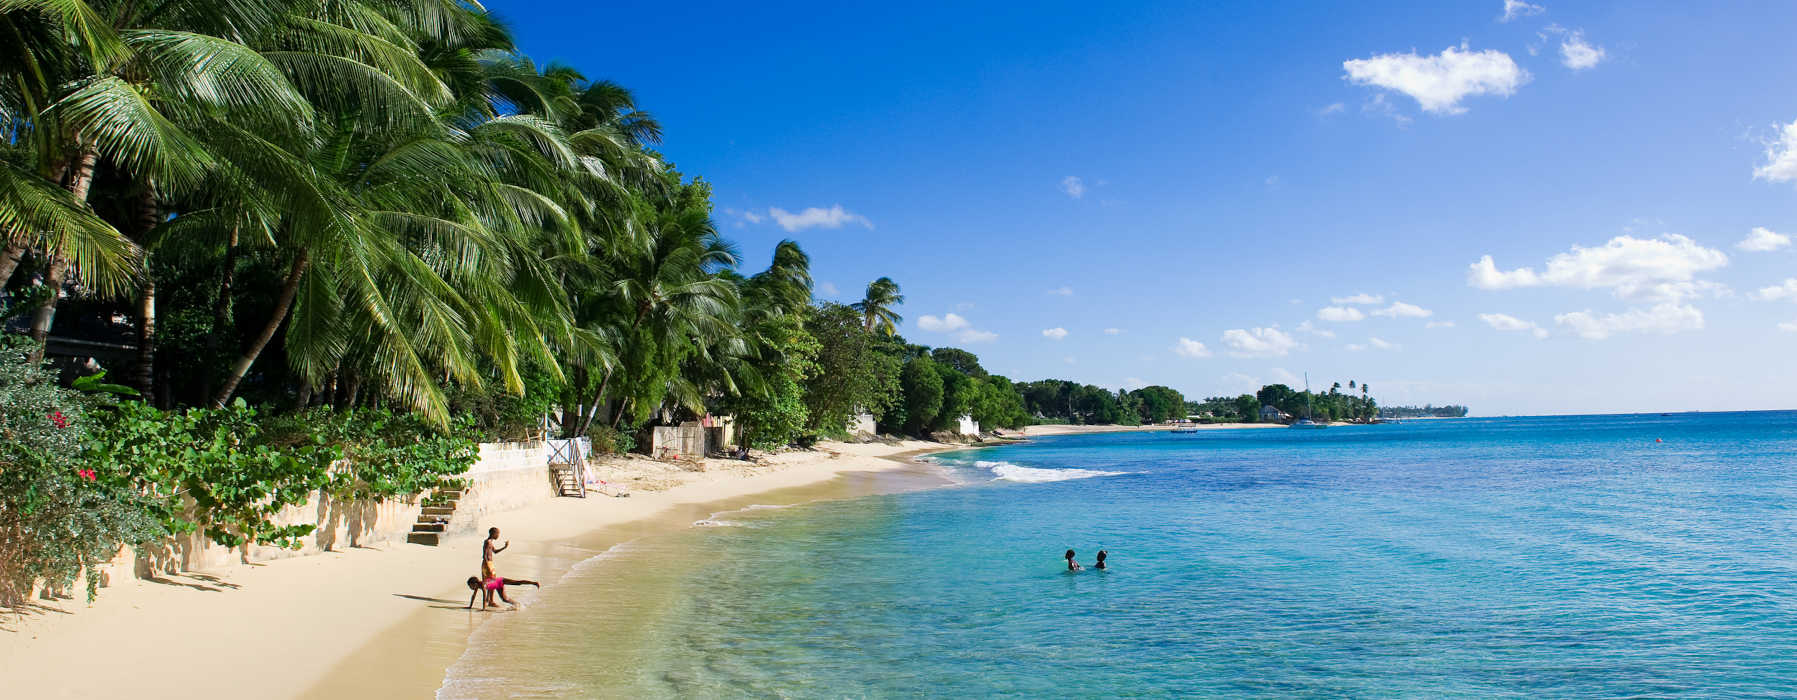 Barbados<br class="hidden-md hidden-lg" /> Luxury Holidays